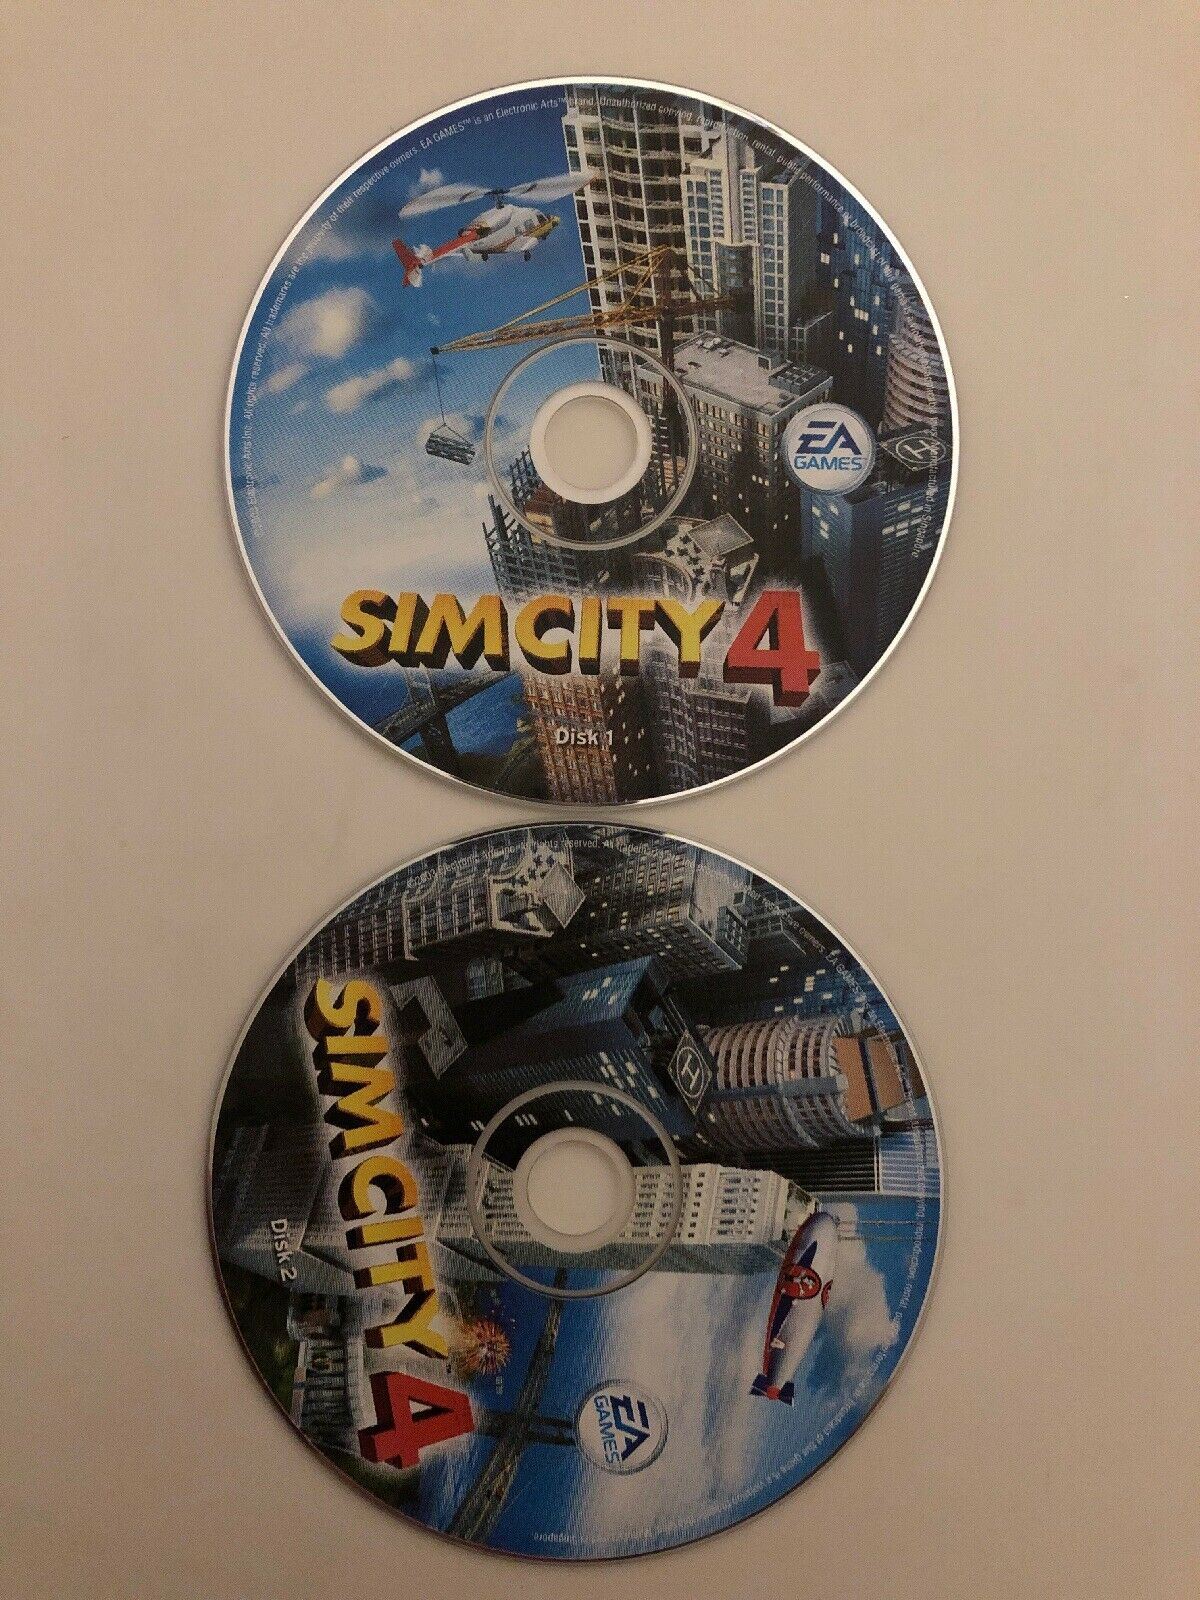 Sim City 4 - PC CD Windows Game - City Building Management Simulation Game